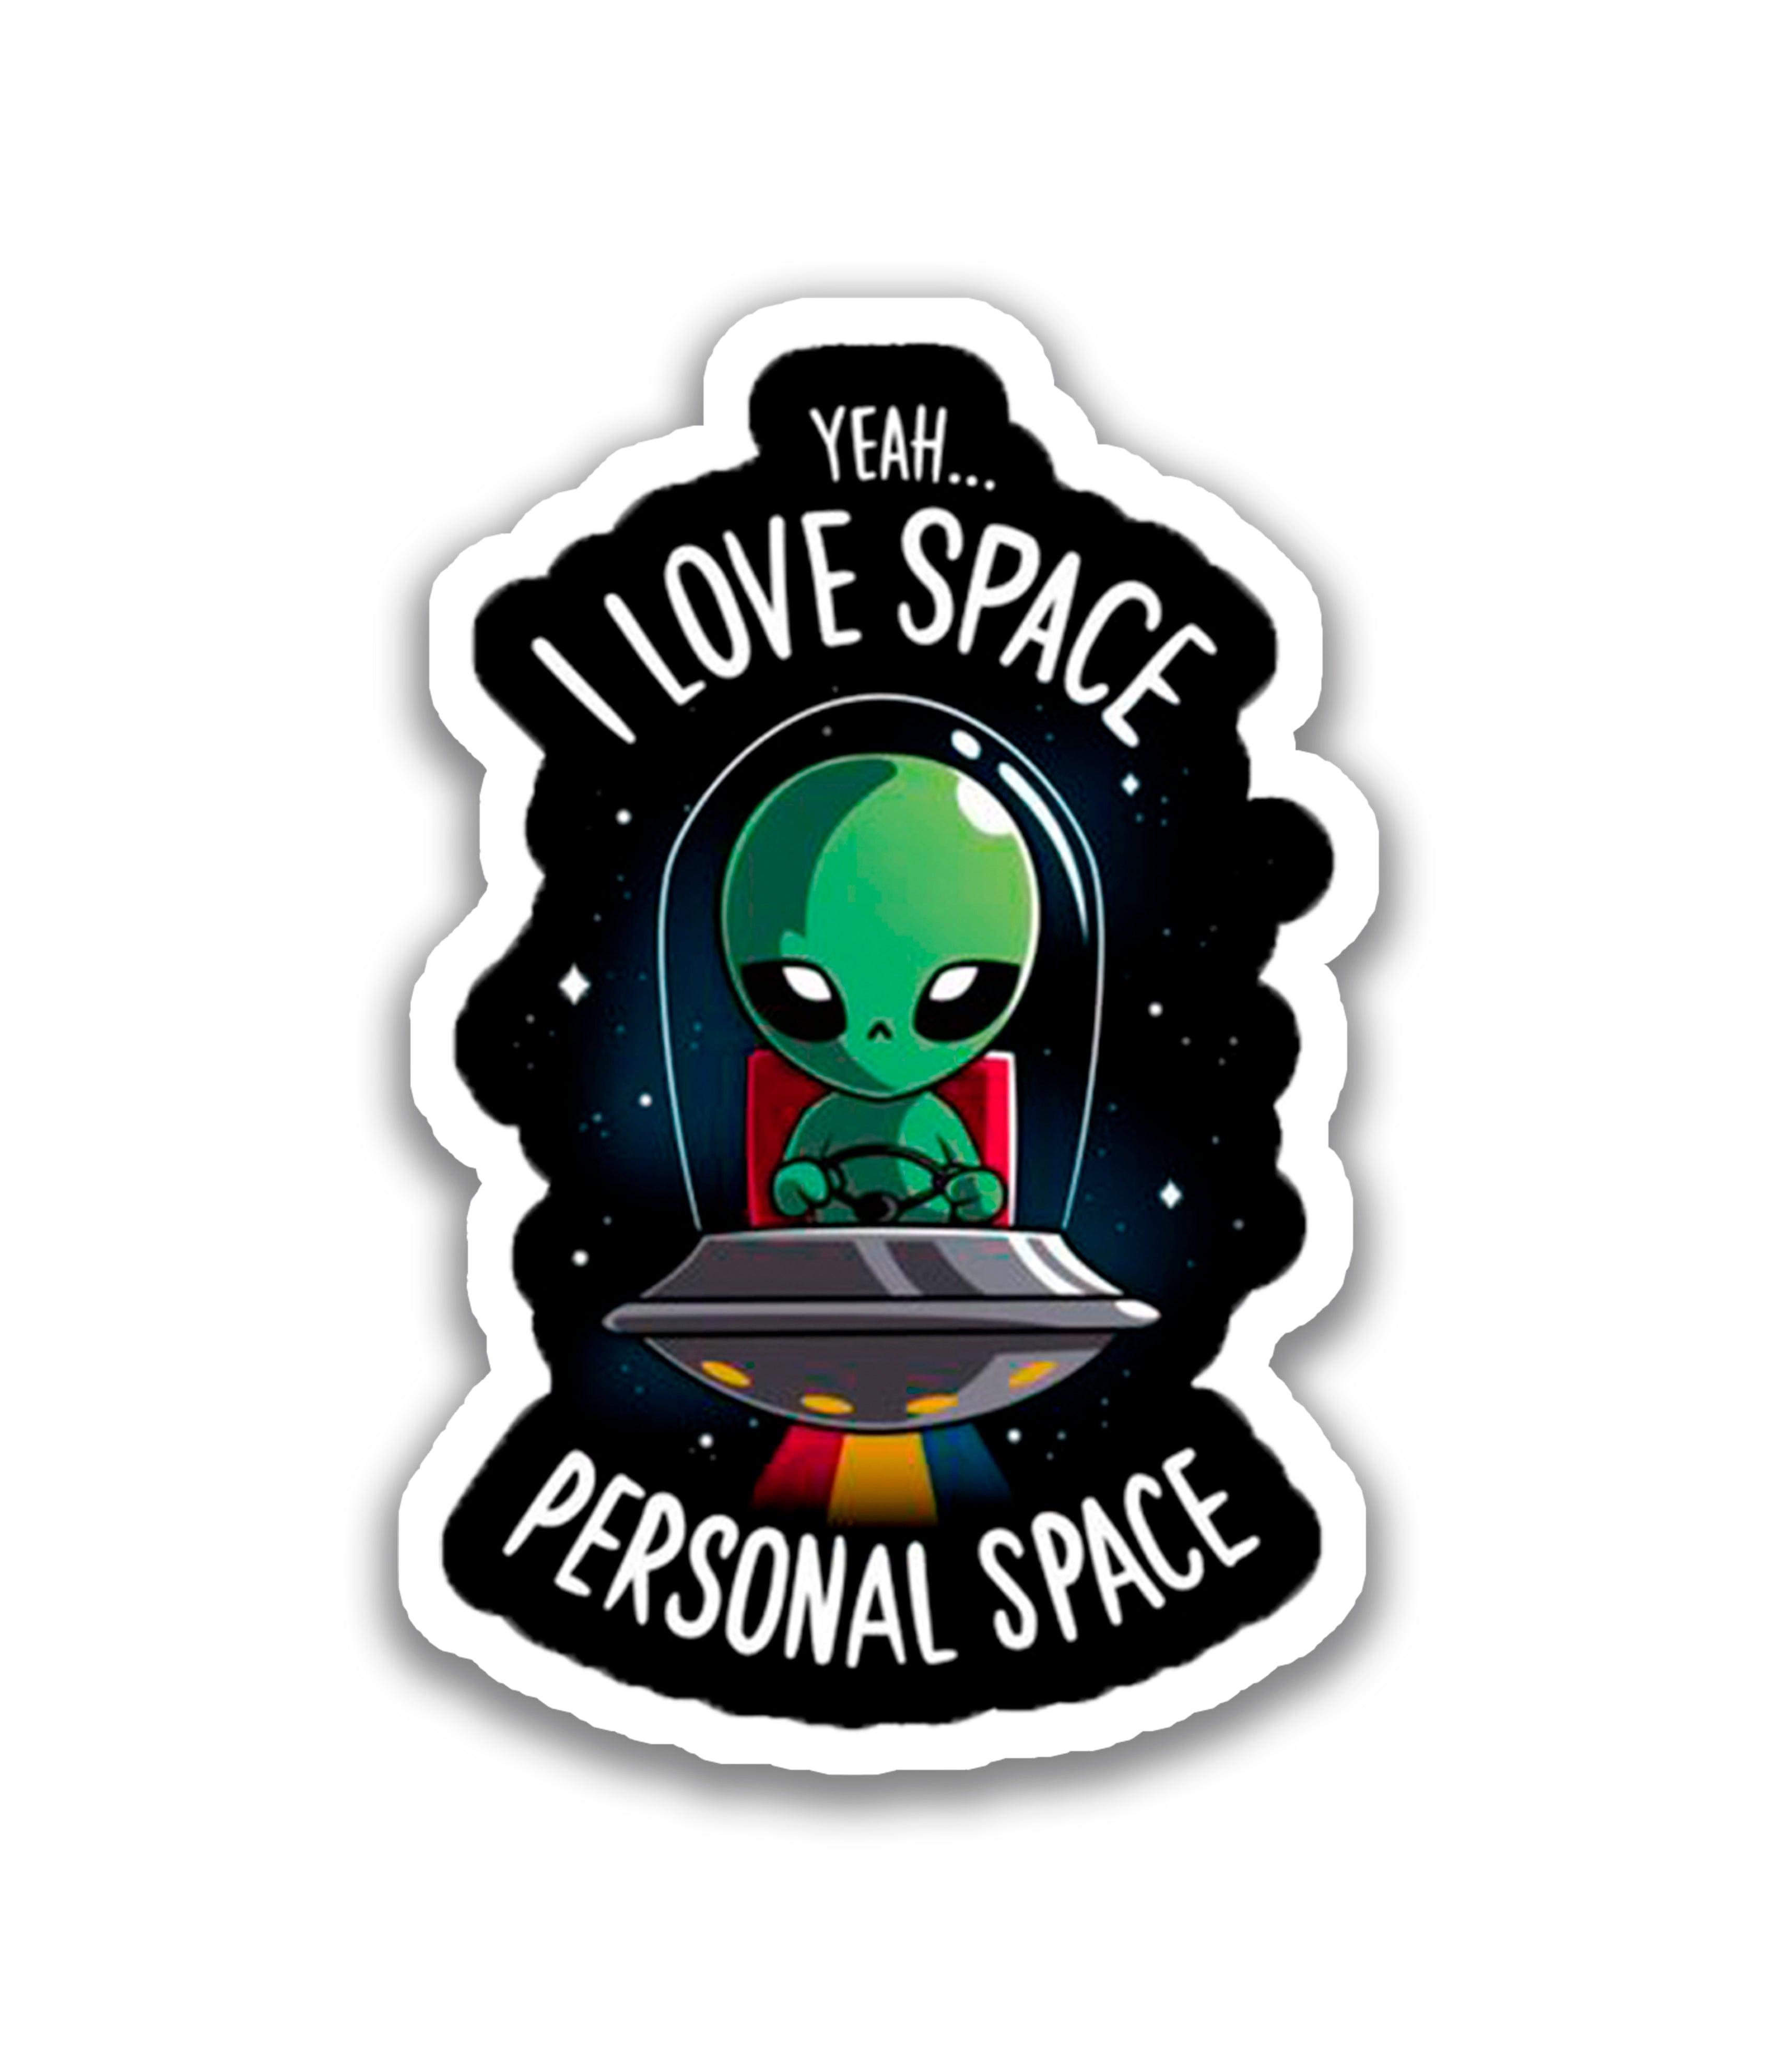 Personal space - Rei do Sticker